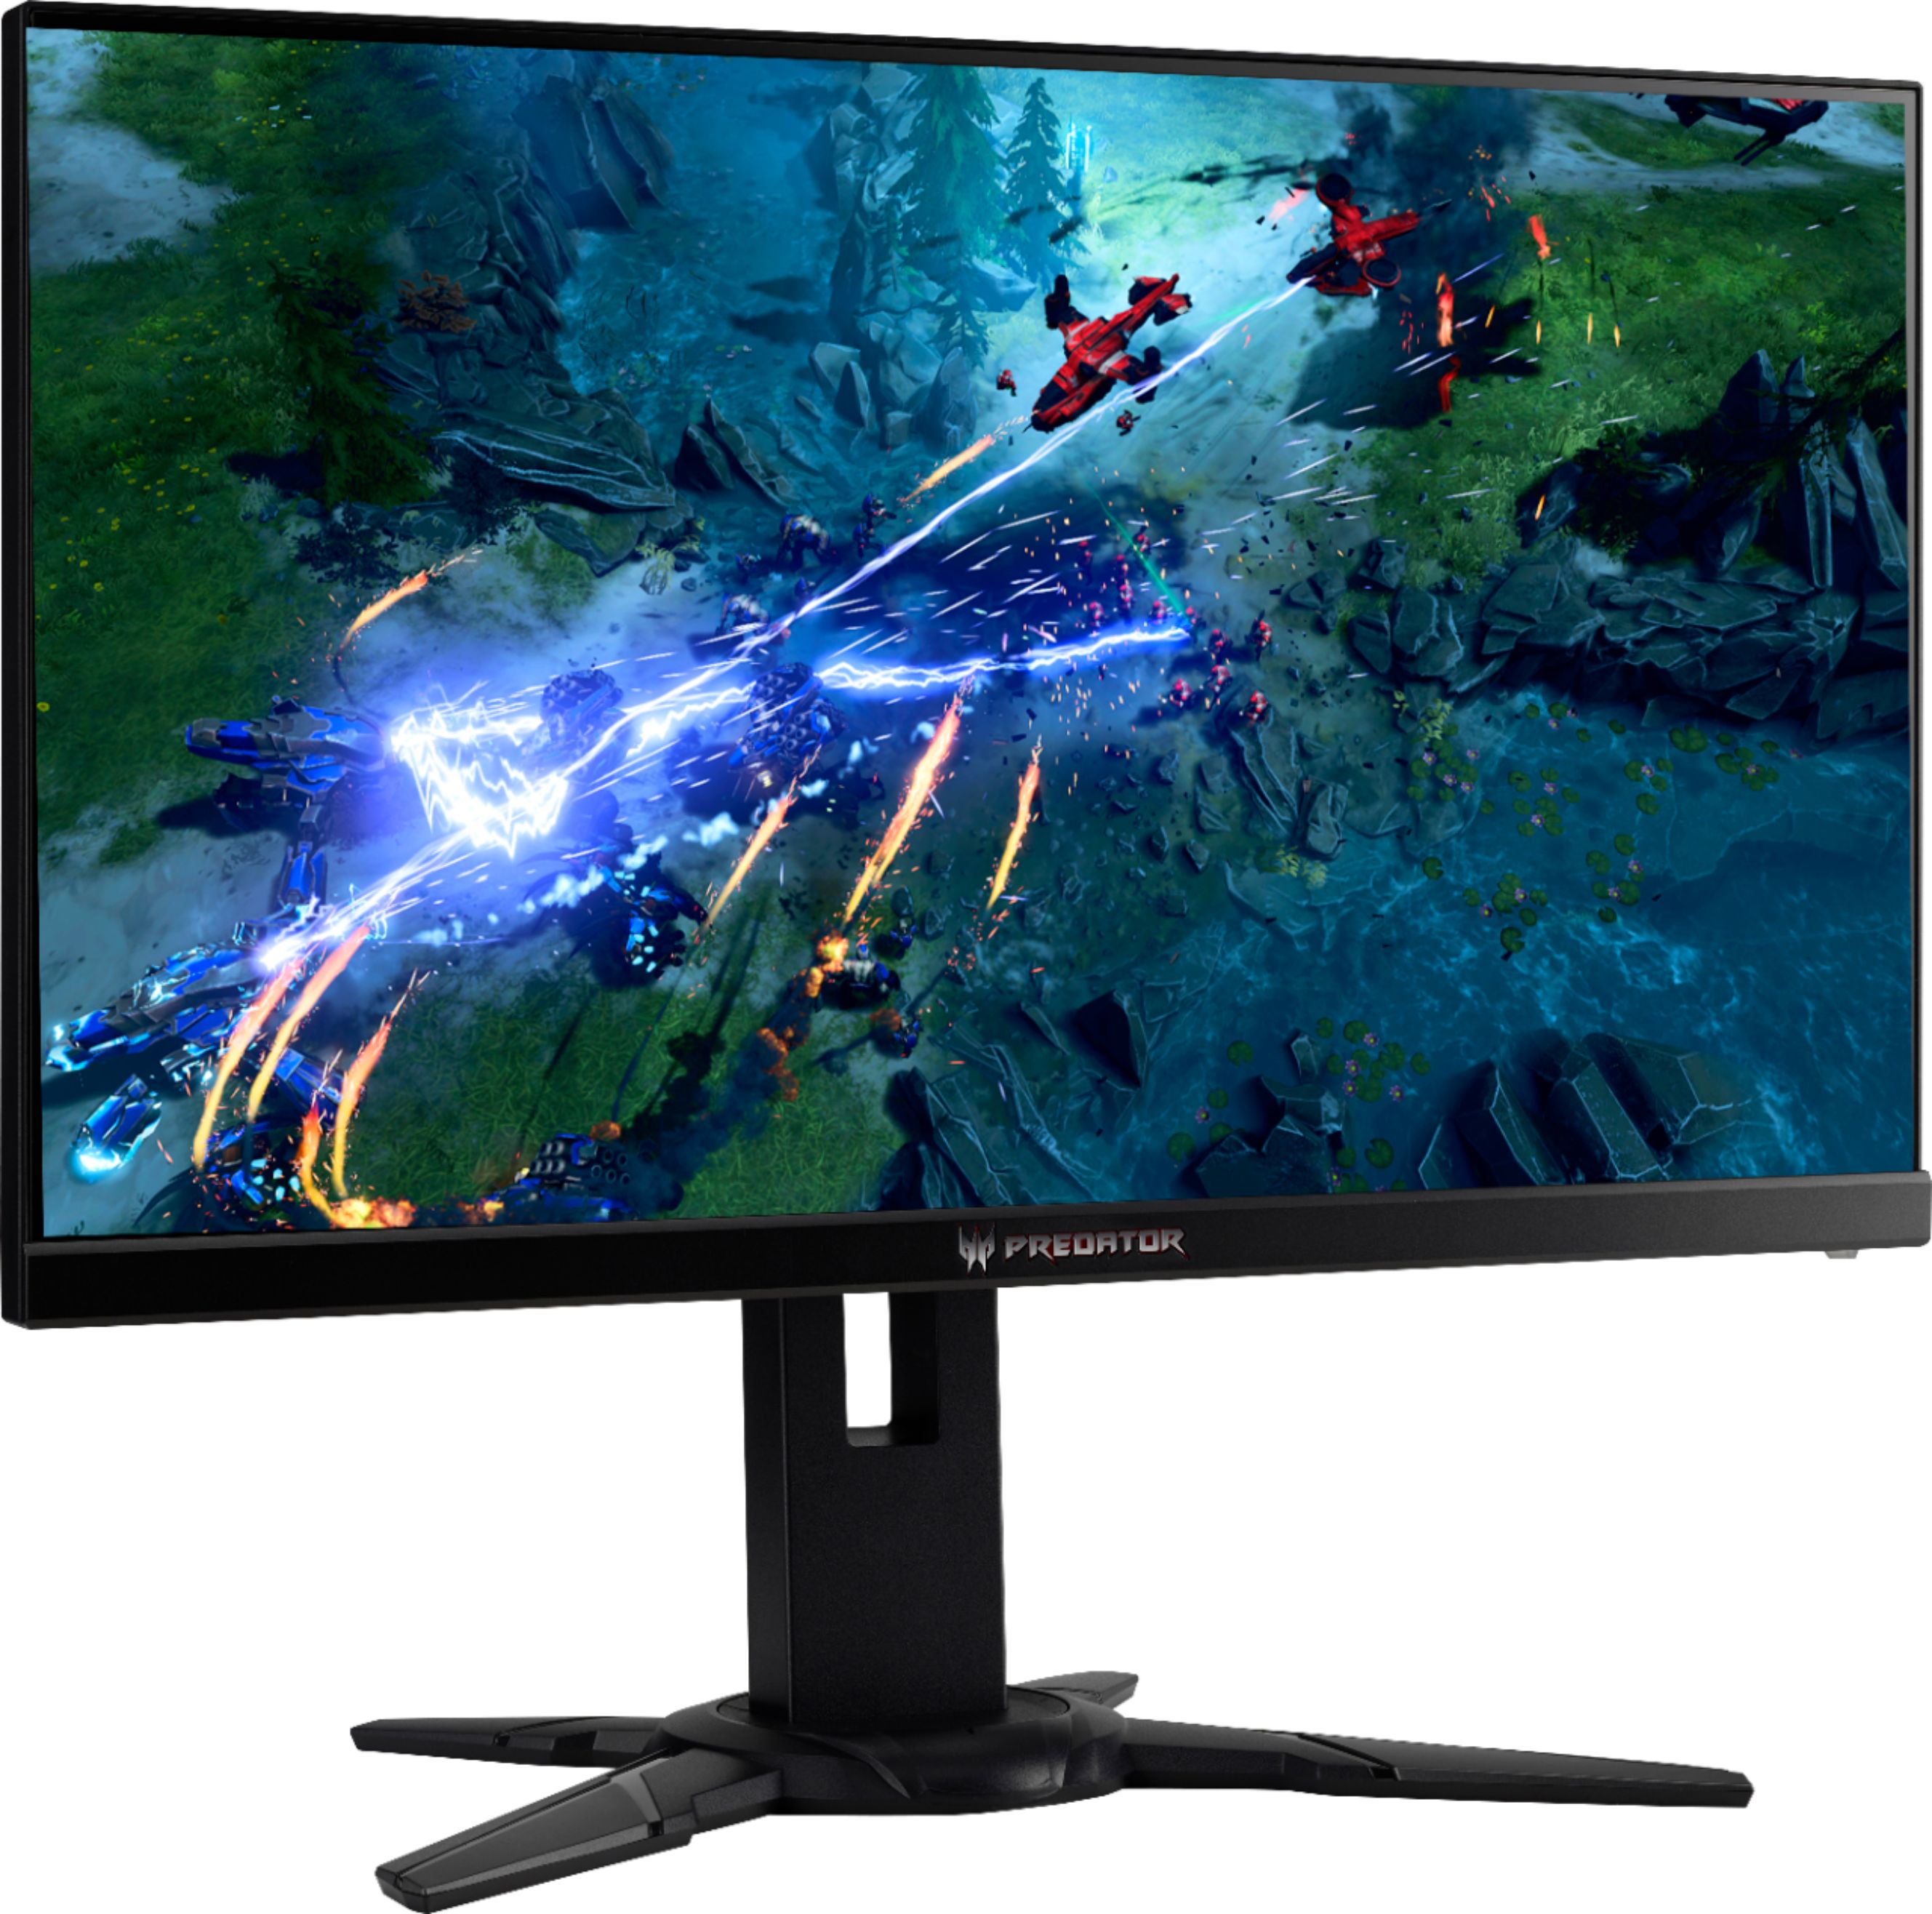 Acer Predator Xb272 27 Led Fhd G Sync Monitor Black Xb272 Bmiprz Best Buy